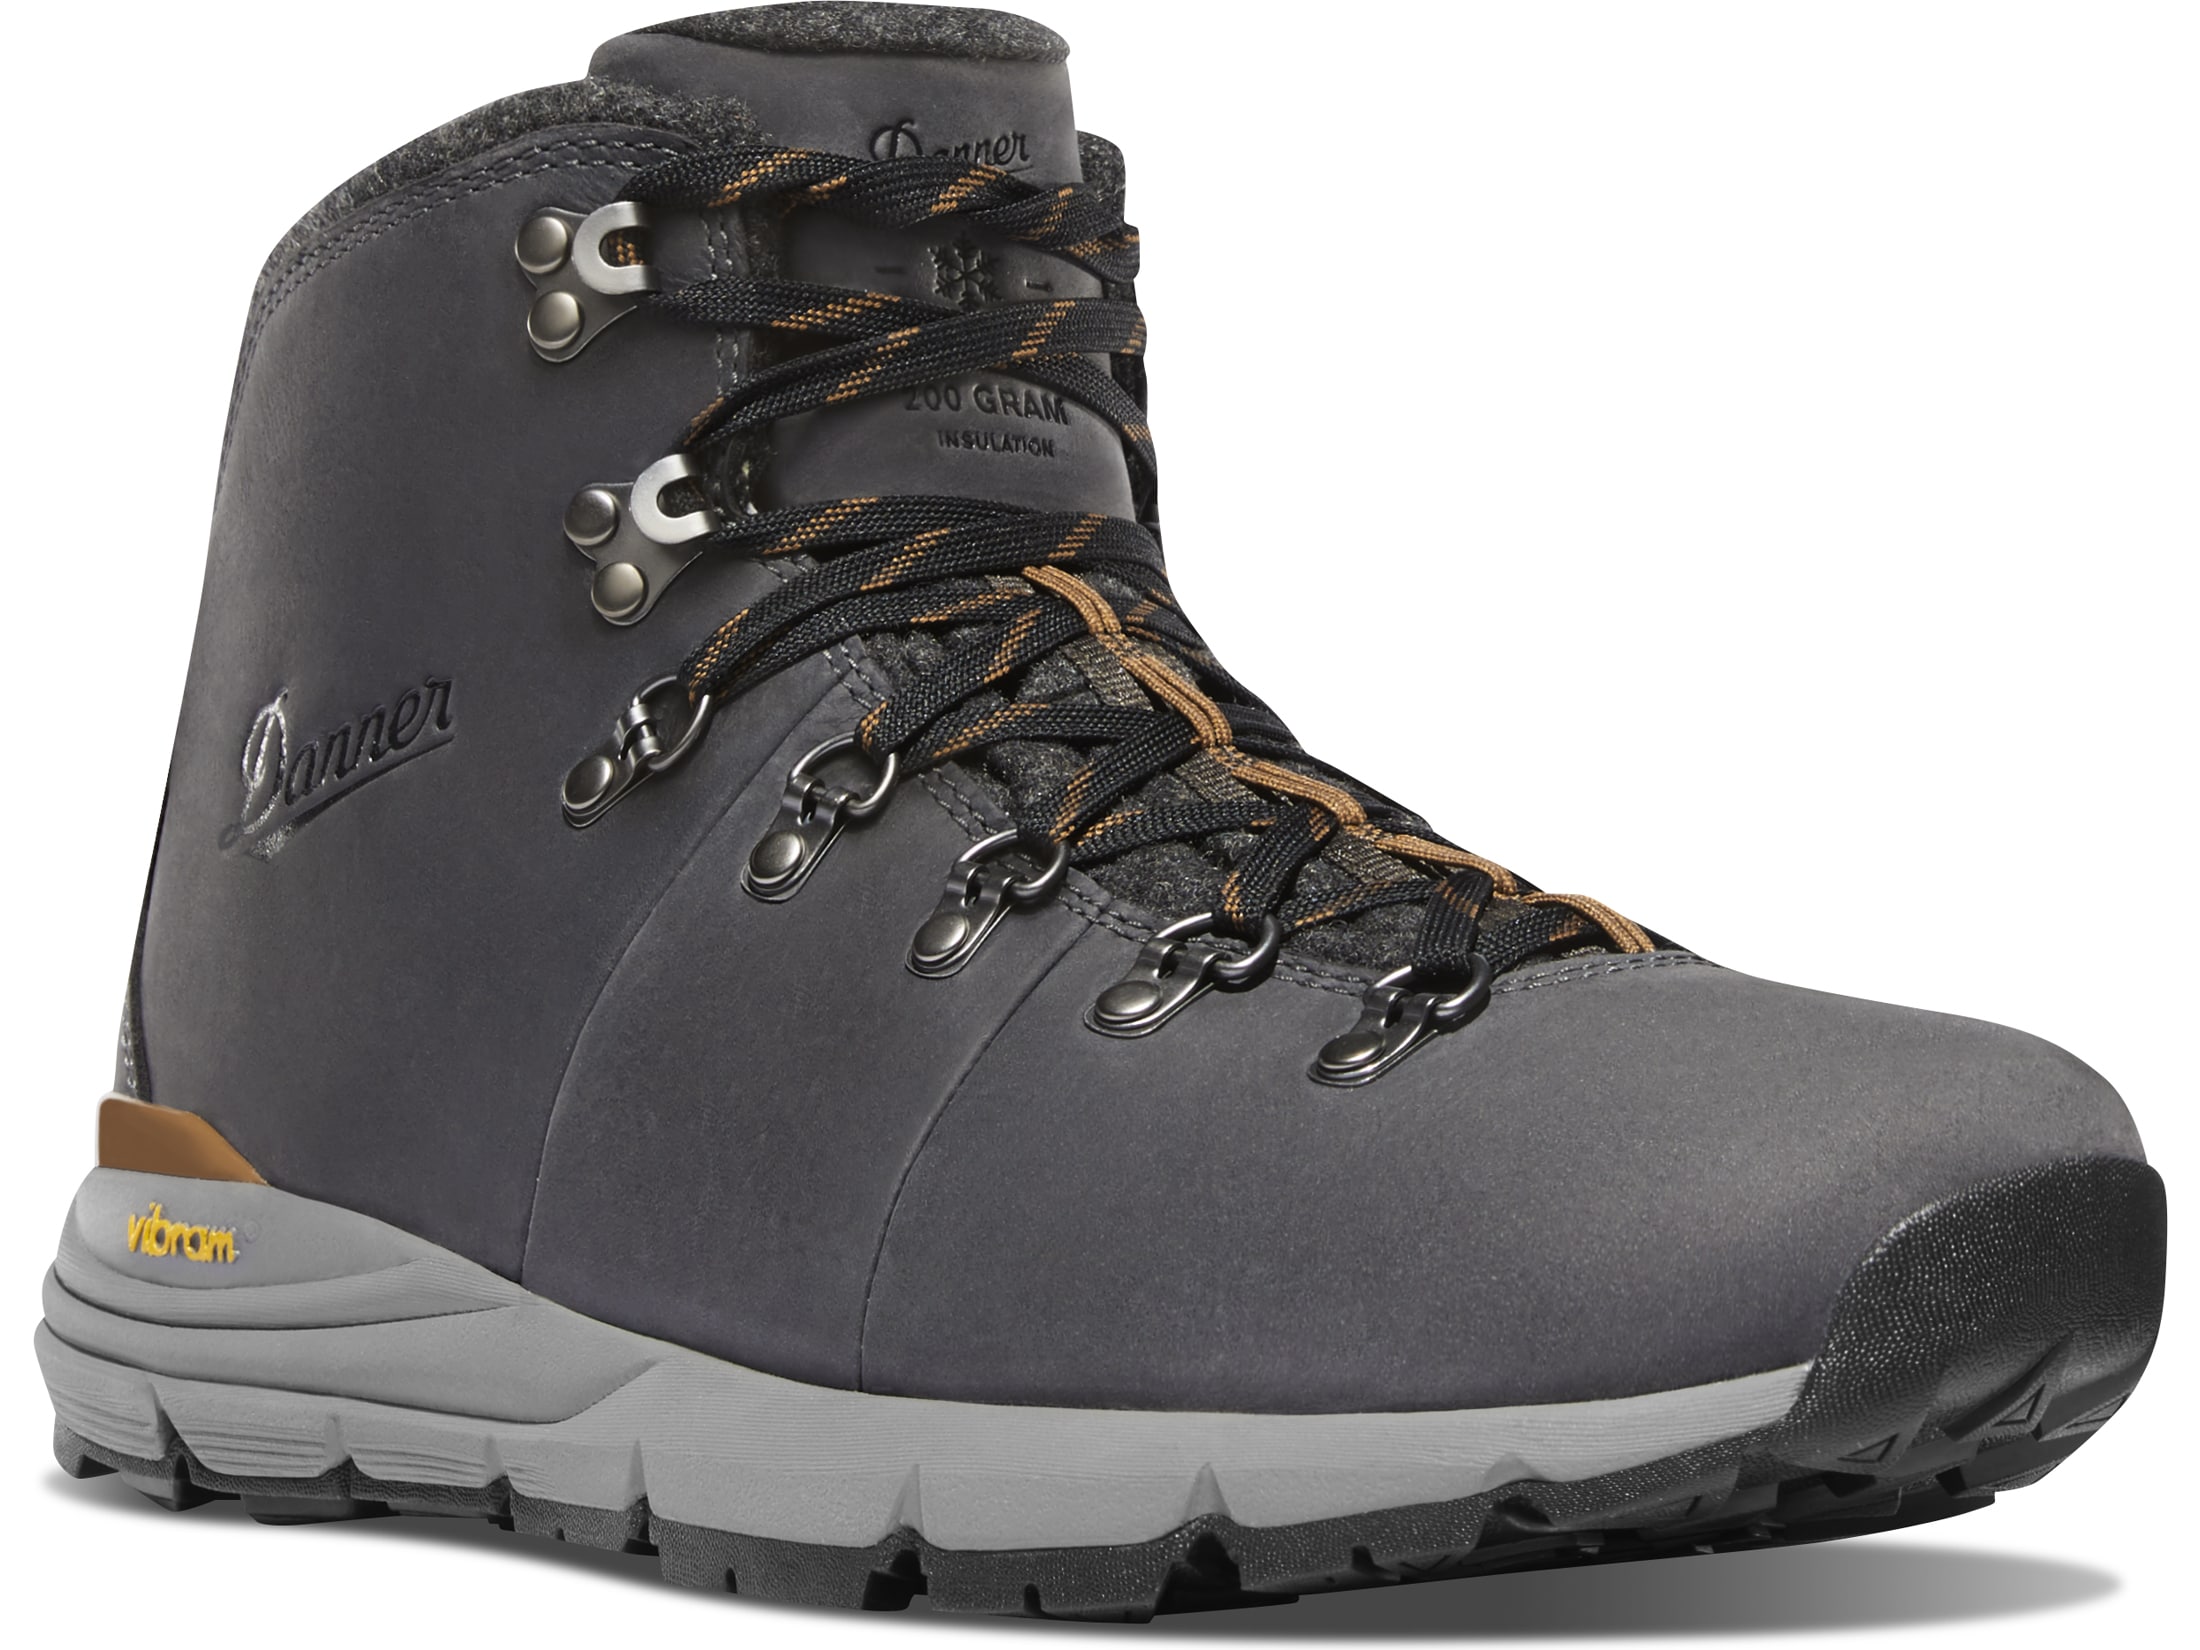 Danner Mountain 600 4.5 Waterproof 200 Gram Insulated Hiking Boots